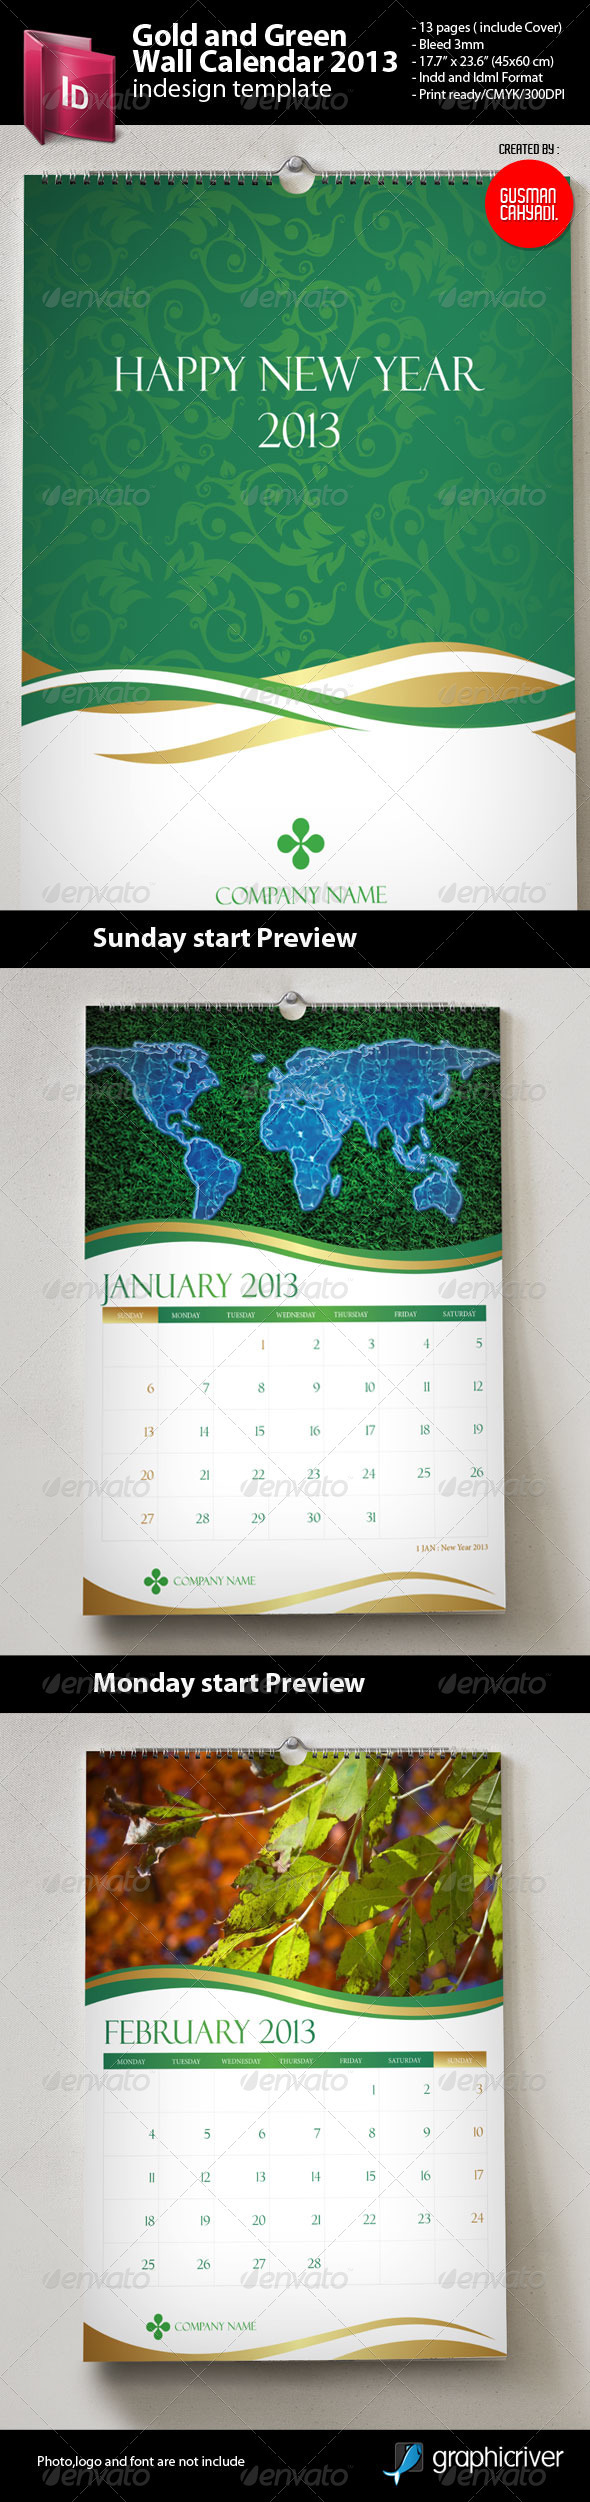 Gold and Green Wall Calendar 2013